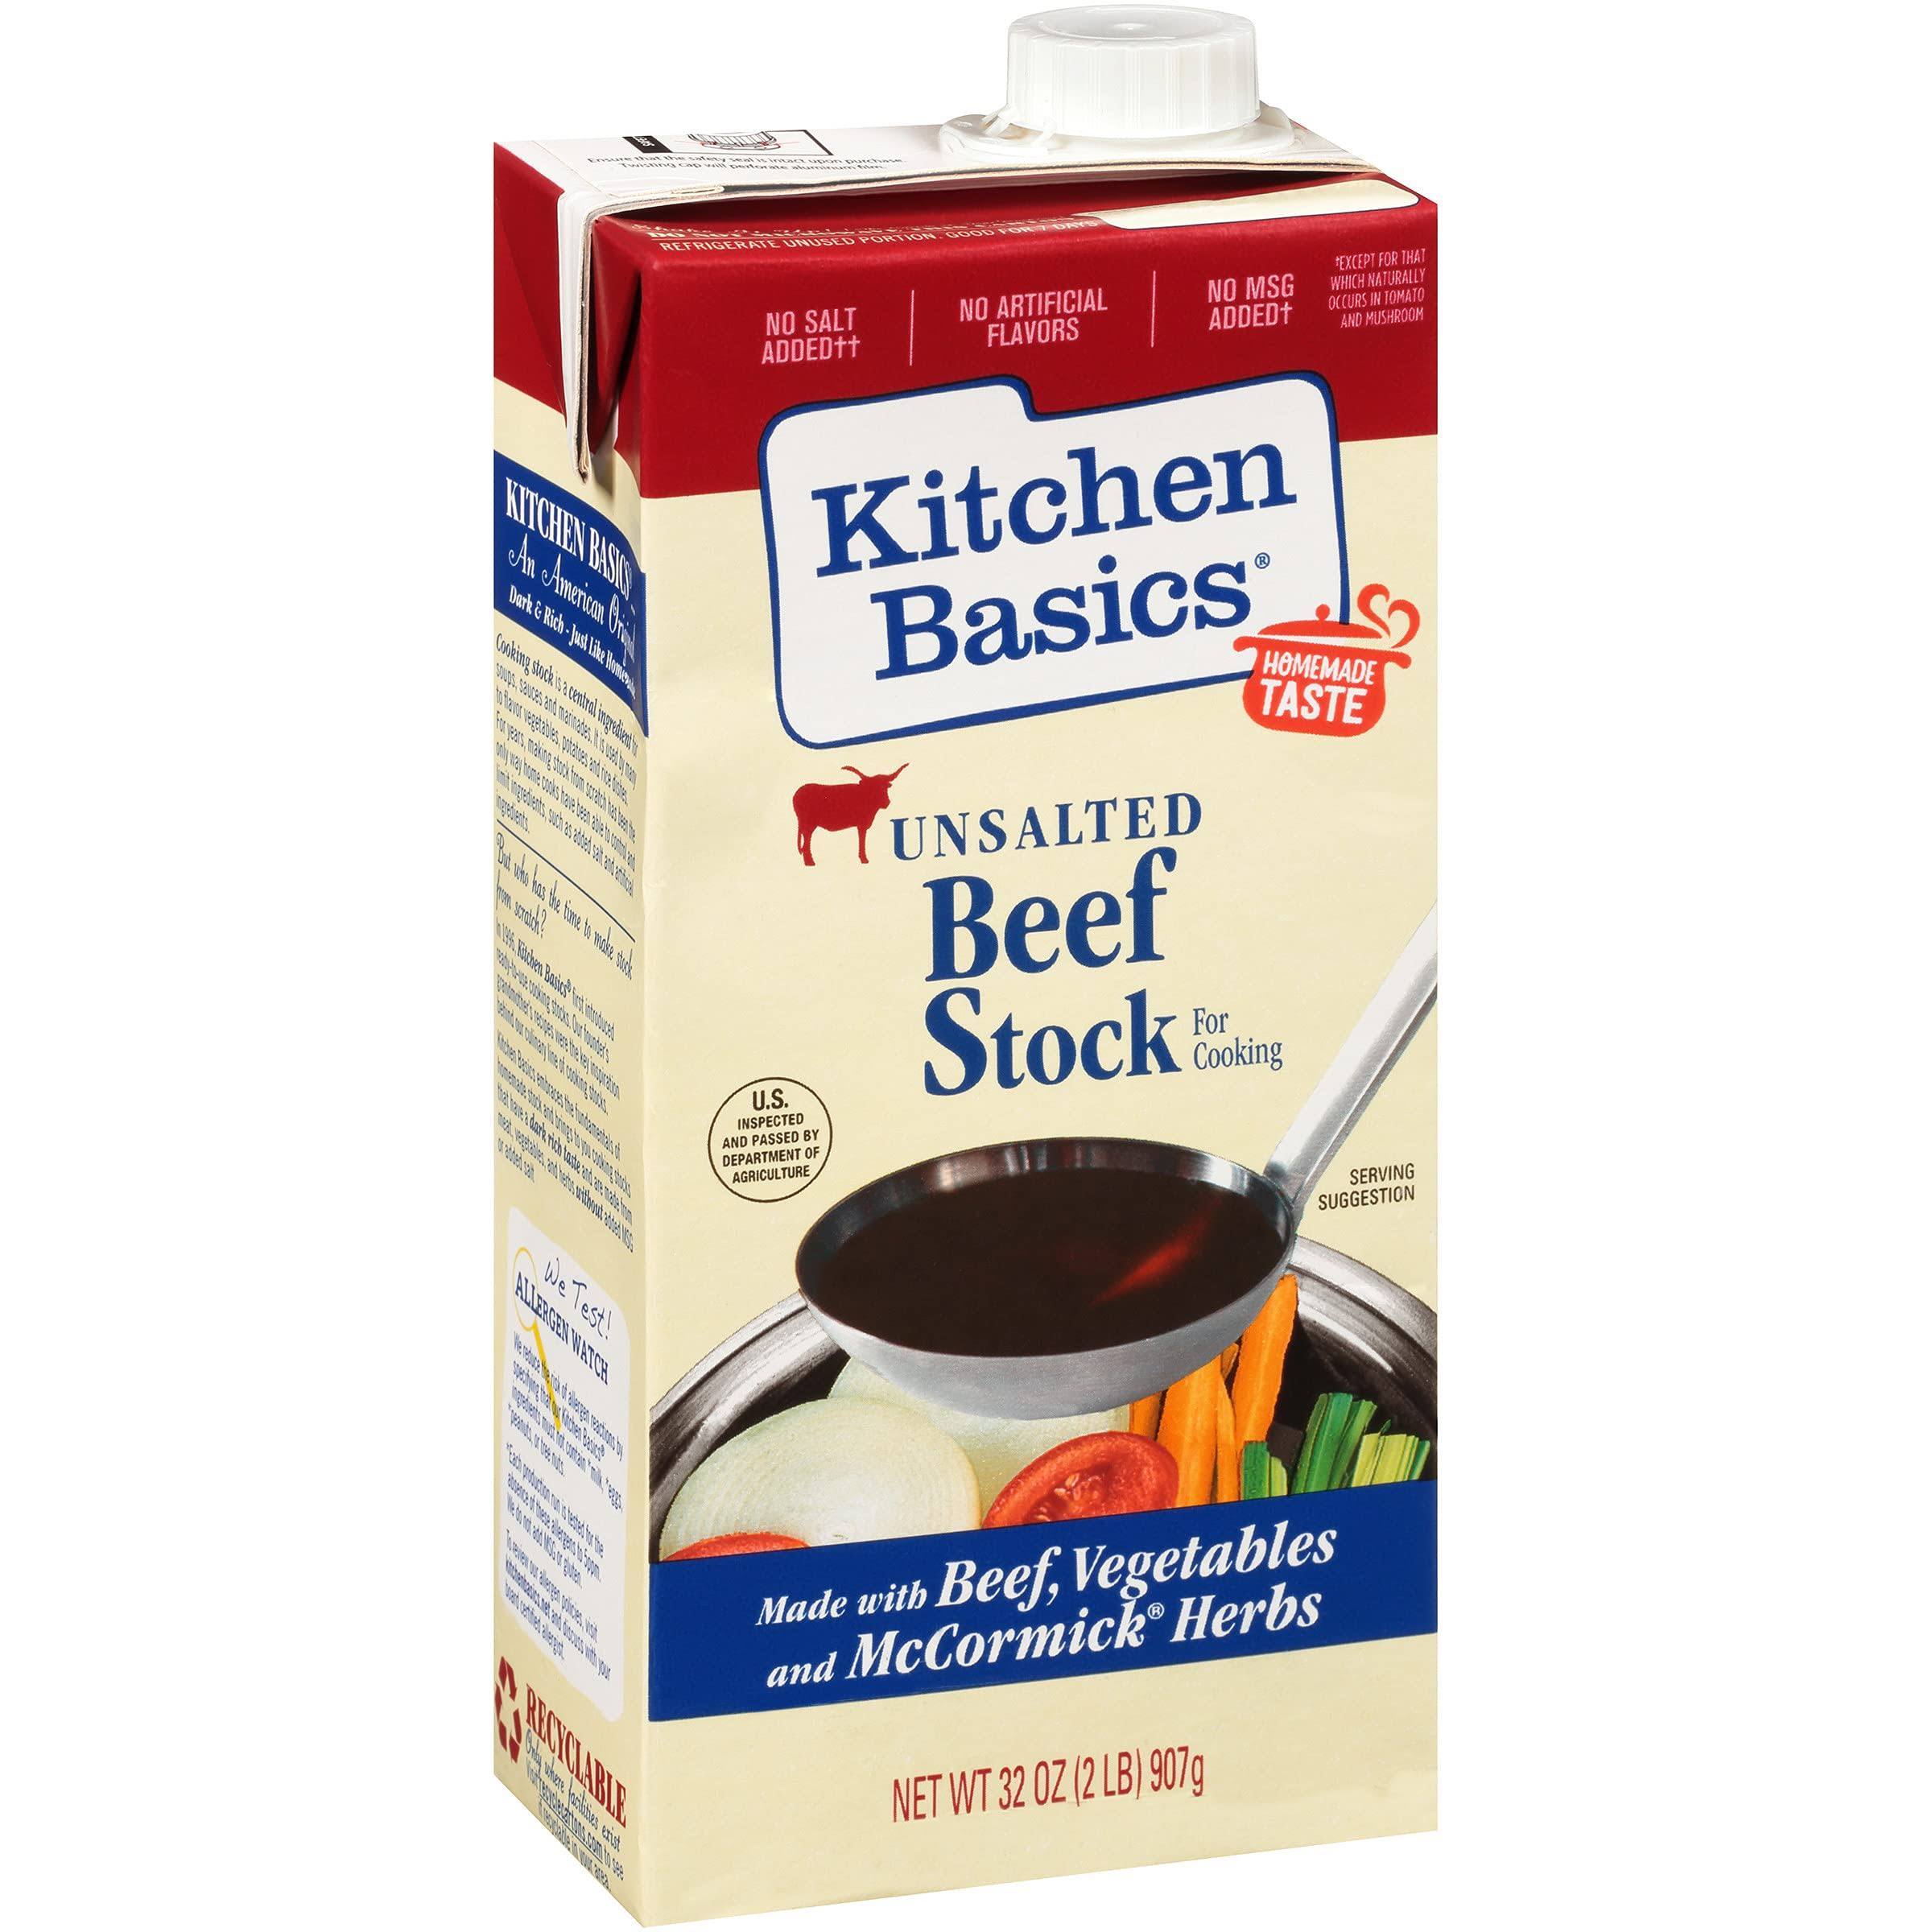 Kitchen Basics Beef Stock - Unsalted, 32 oz